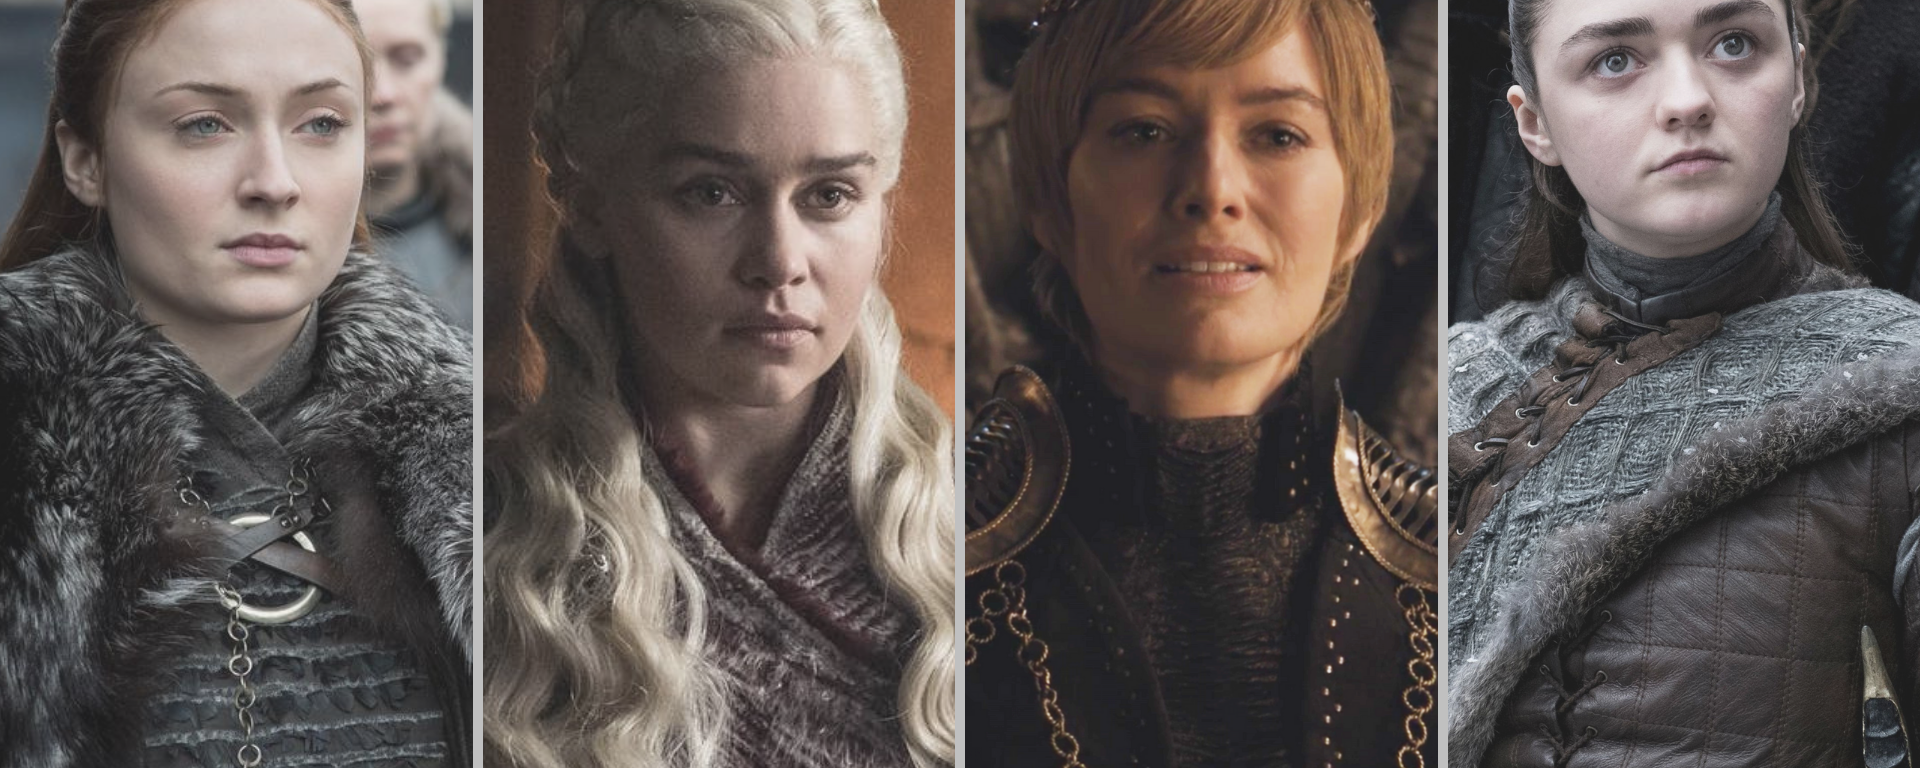 Sophie Turner as Sansa Stark, Emilia Clarke as Daenarys Targaryen, Lena Headey as Cersei Lannister, and Maisie Williams as Arya Stark in the final season of "Game of Thrones."